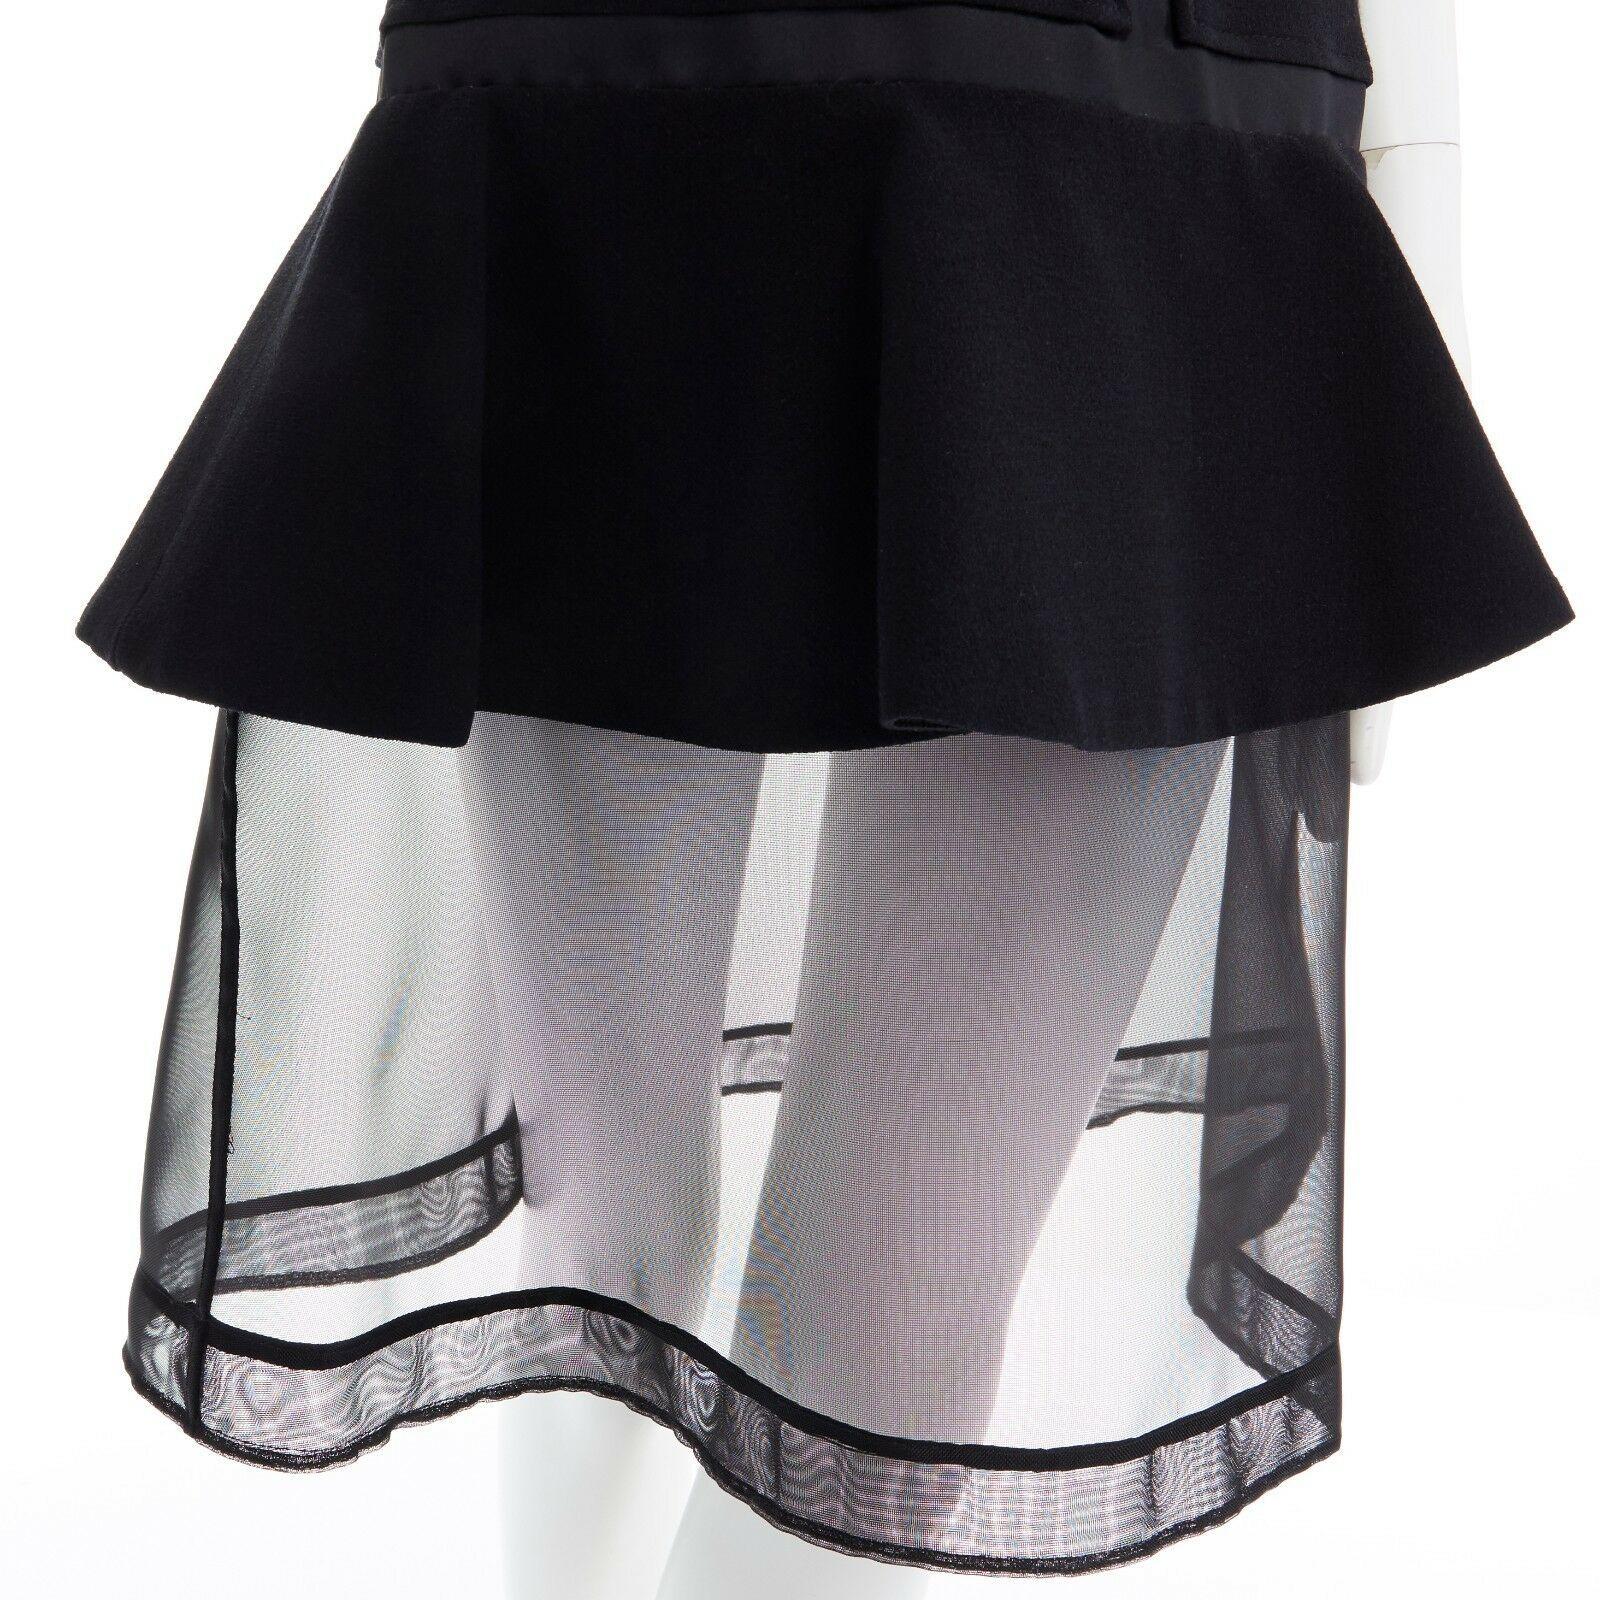 GIVENCHY TISCI 2011 black angular patched sheer skirt layer dress FR38 M 5